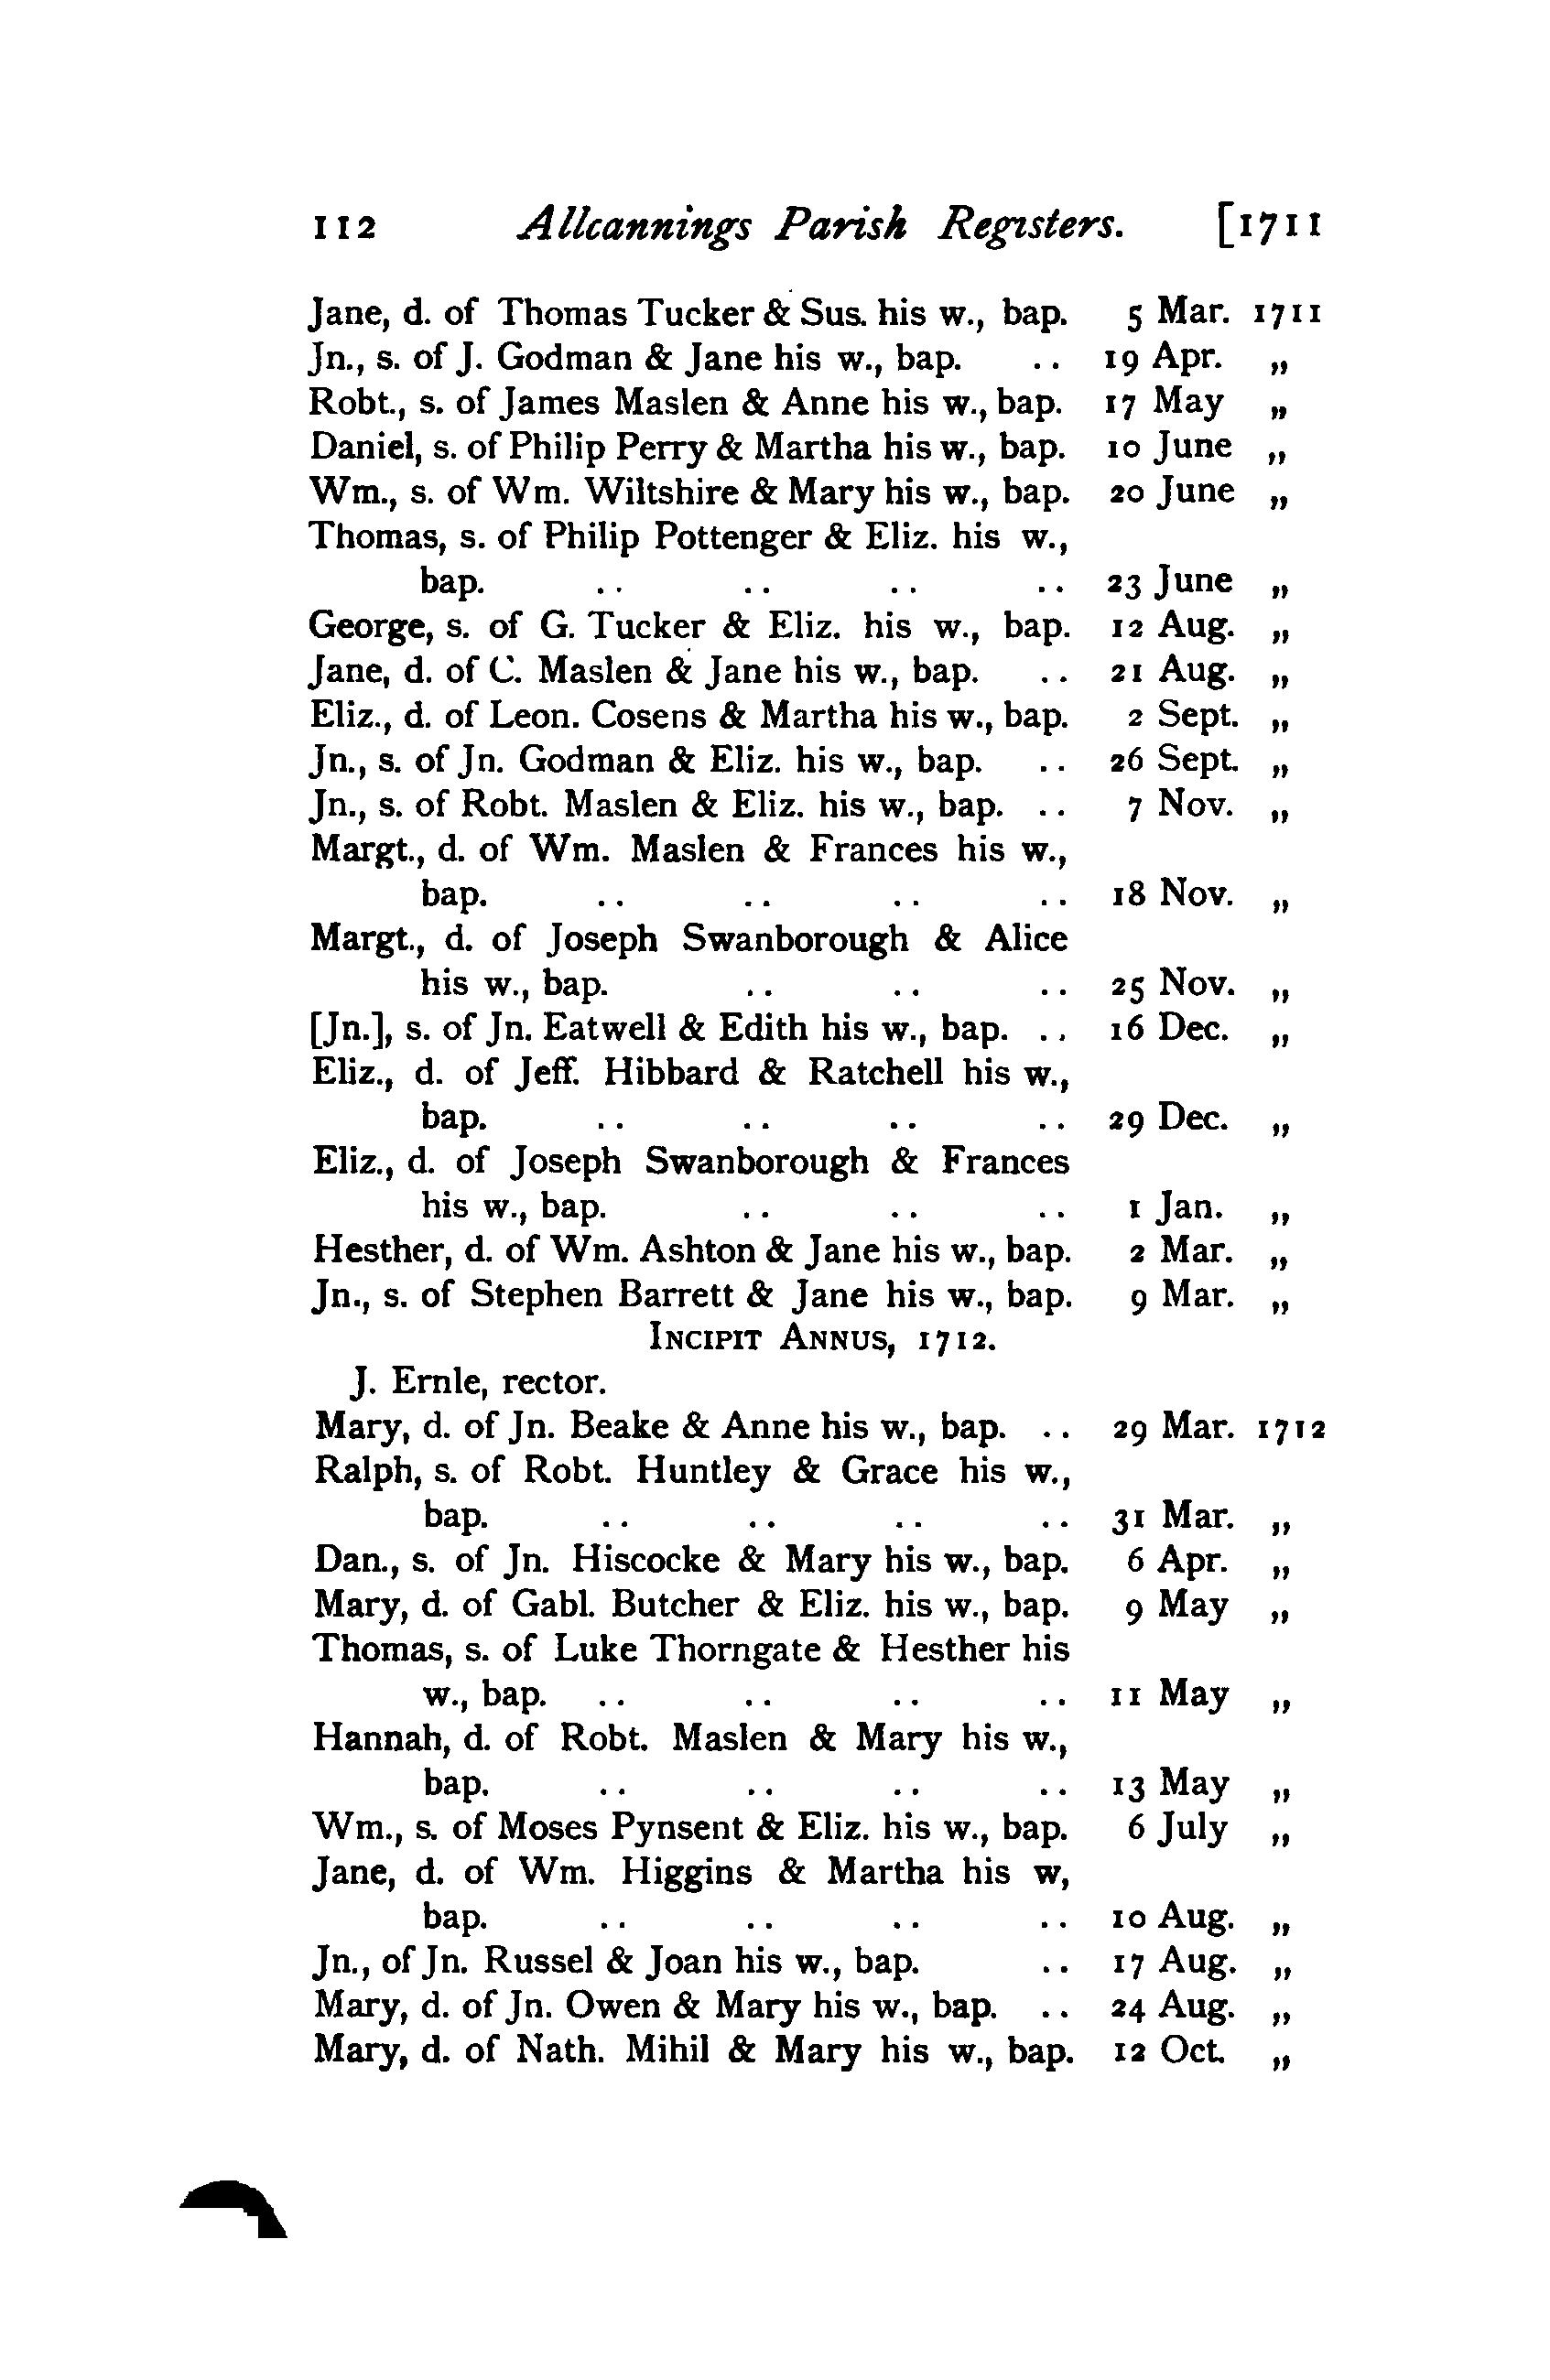 1905 Transcript showing baptism of Margaret Swanborough in 1711